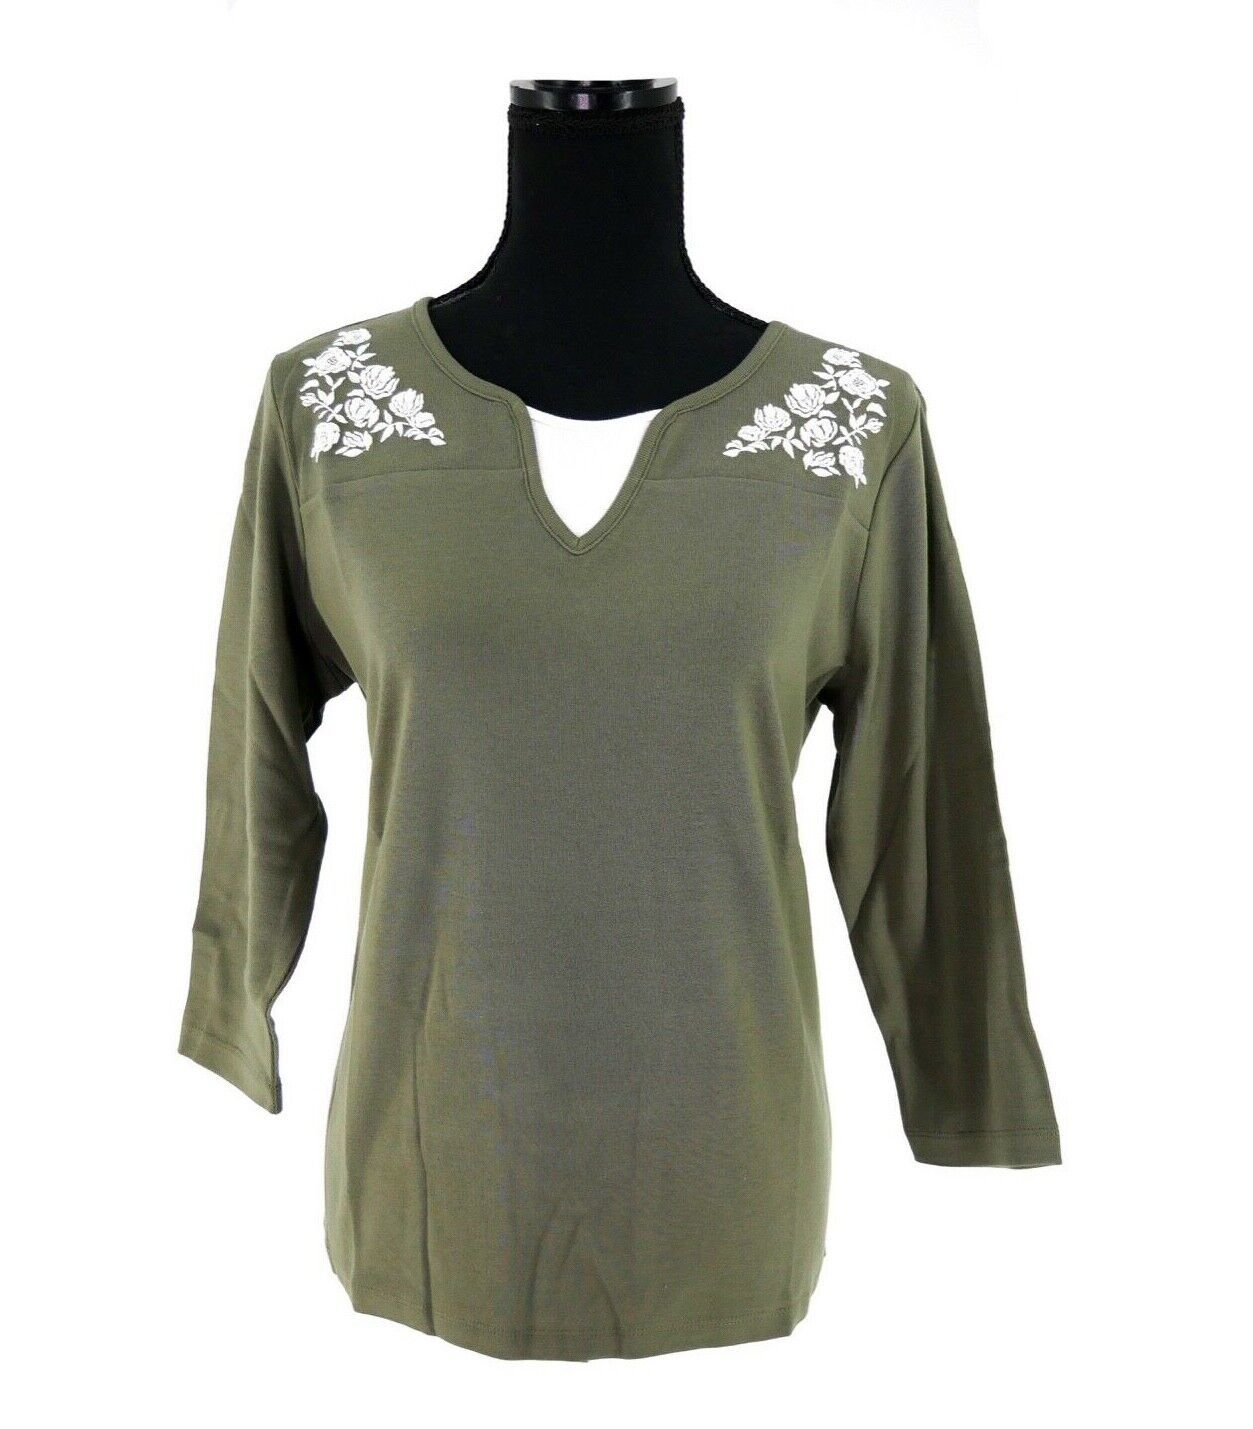 Women's Embroidered Cotton Layered-Look Top Karen Scott Size P/L